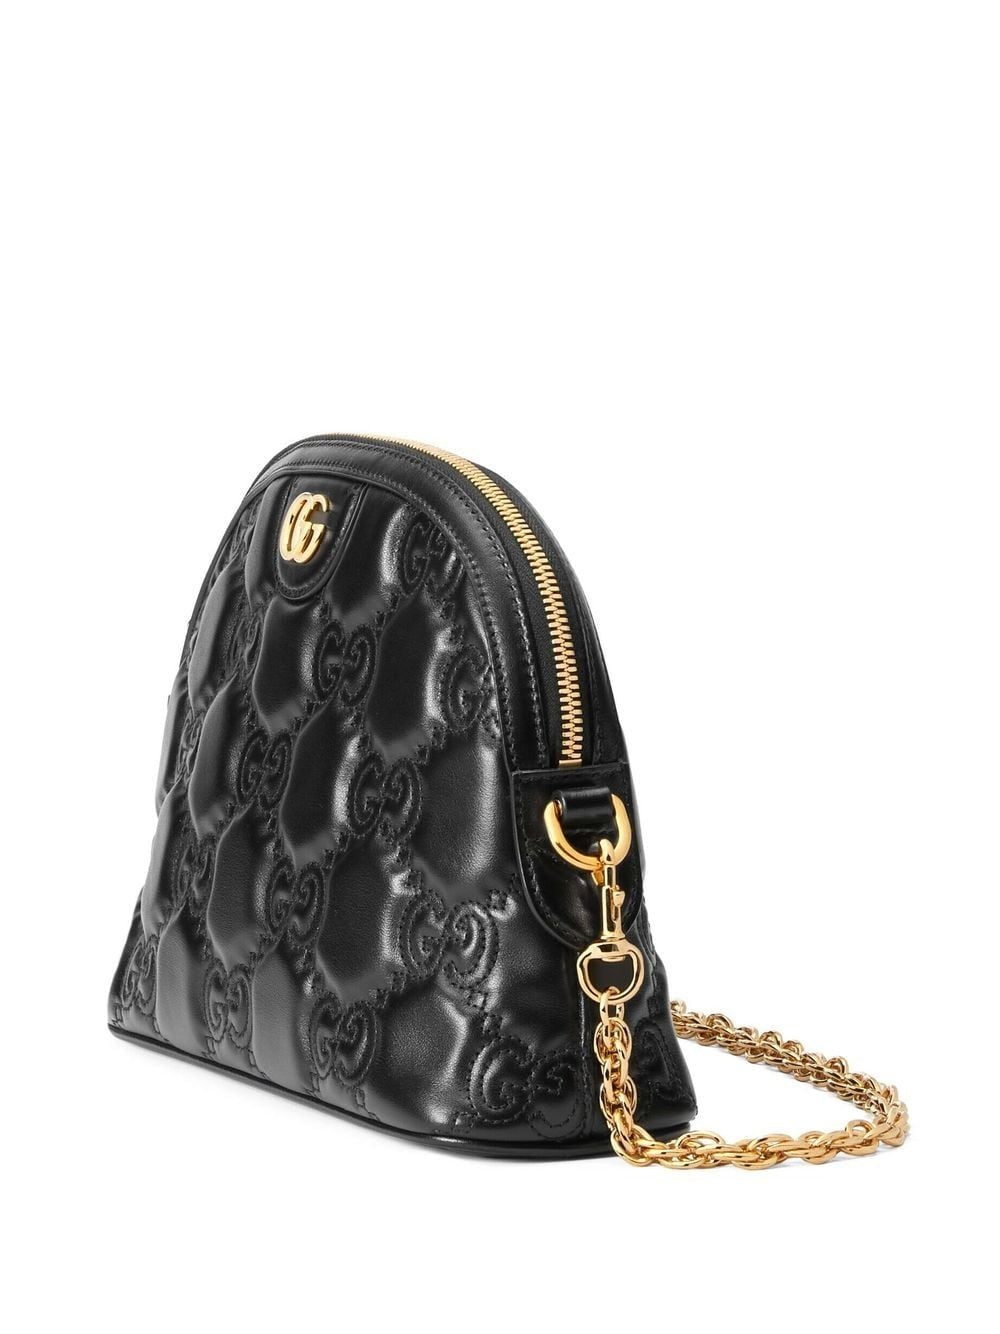 LOUIS VUITTON Small Size Black Colour Bag For Women GC-8973-WBG